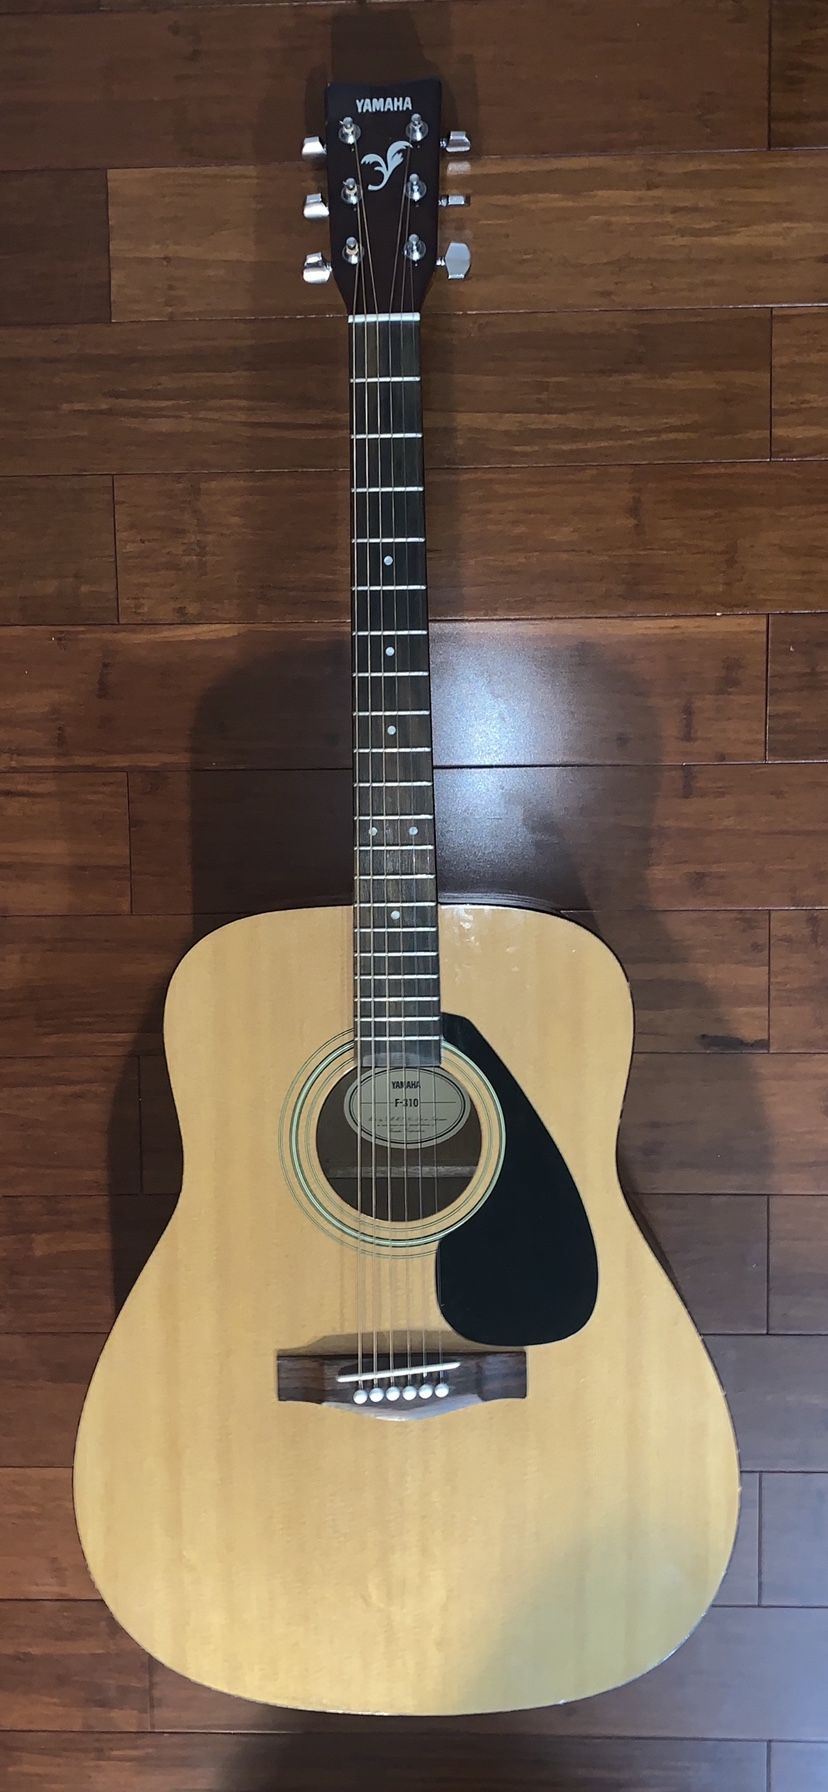 Yamaha Acoustic Guitar (negotiable)